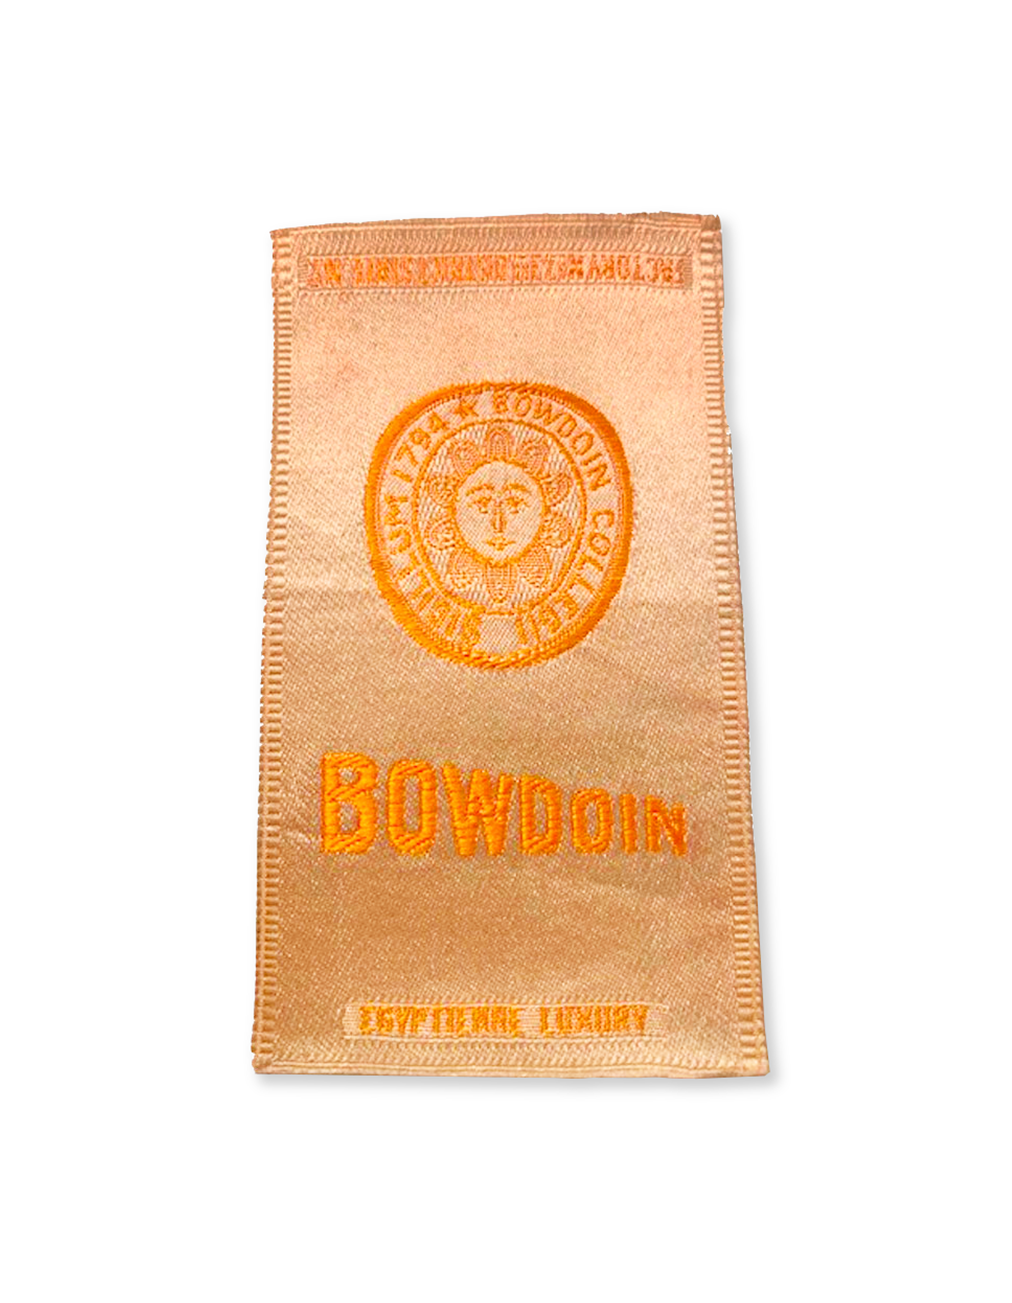 Bowdoin College Silk Paperweight